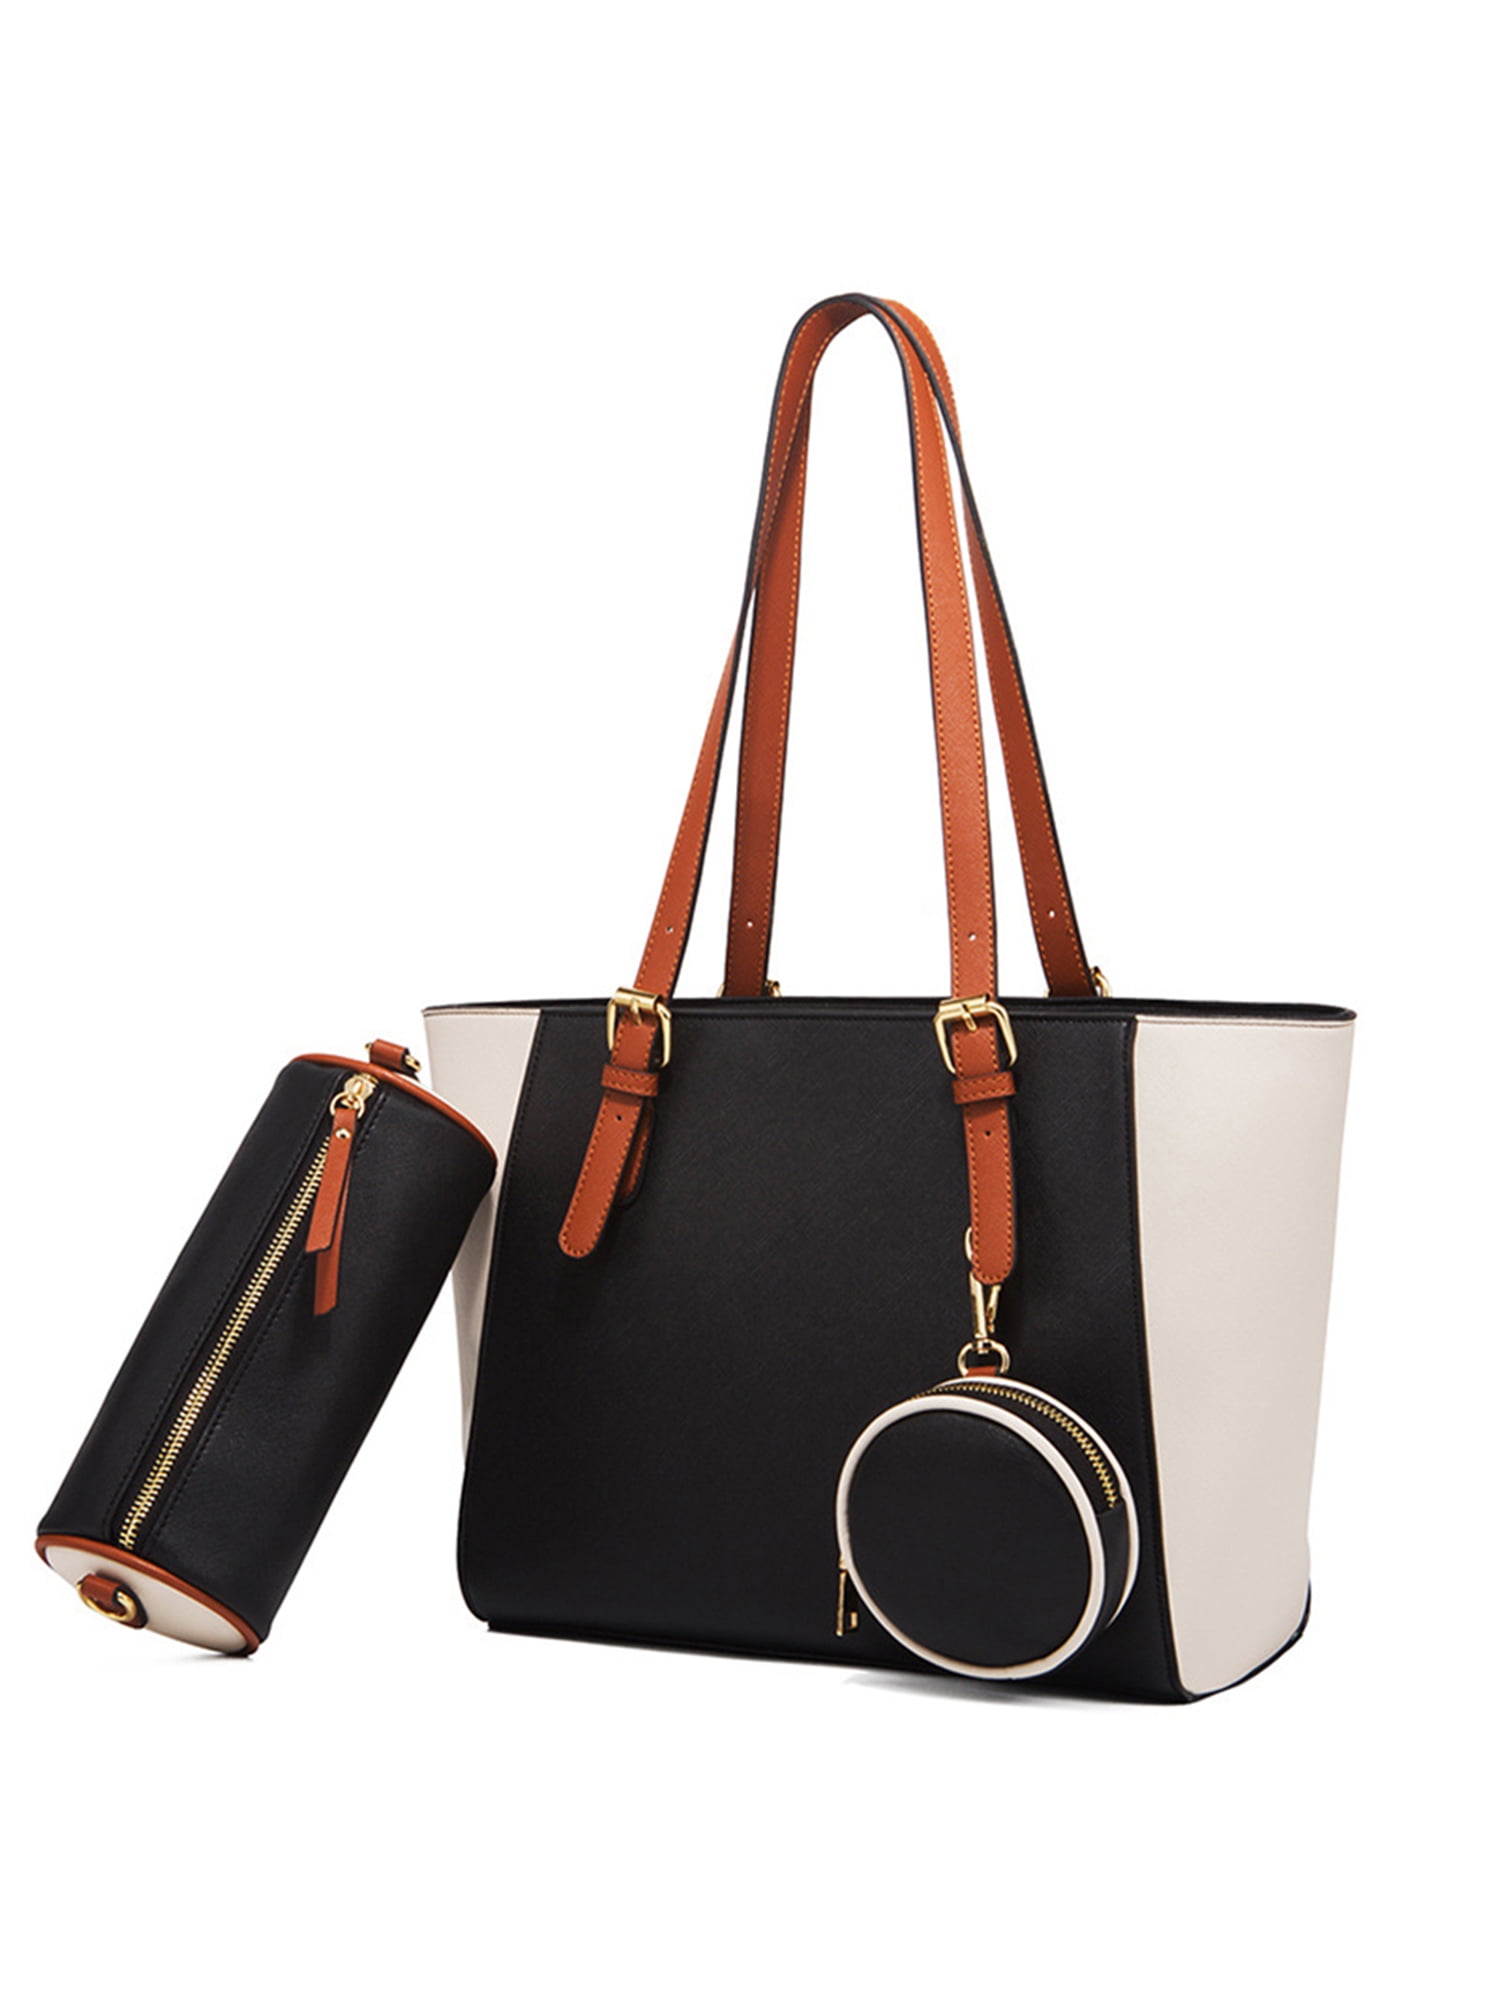 Miayilima Womens Tote Bag Fashion Handbags Ladies Purse Satchel Shoulder  Bags Tote Leather Bag For Ladies 